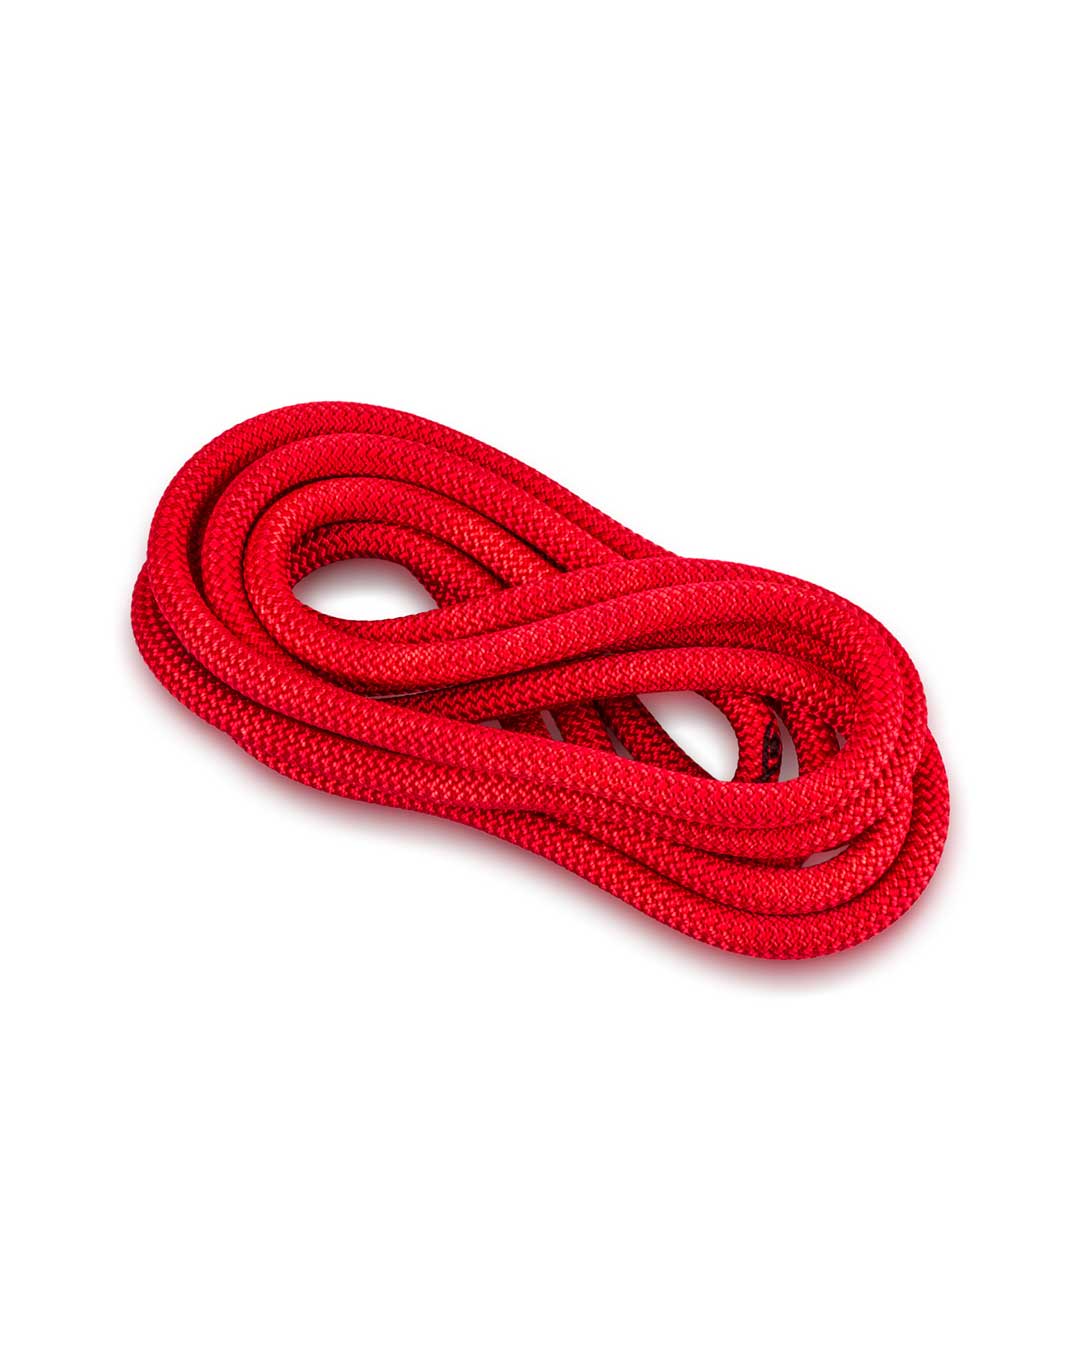 Cuerda de gimnasia rítmica VENTURELLI  (Certificada FIG) roja - 3 m 